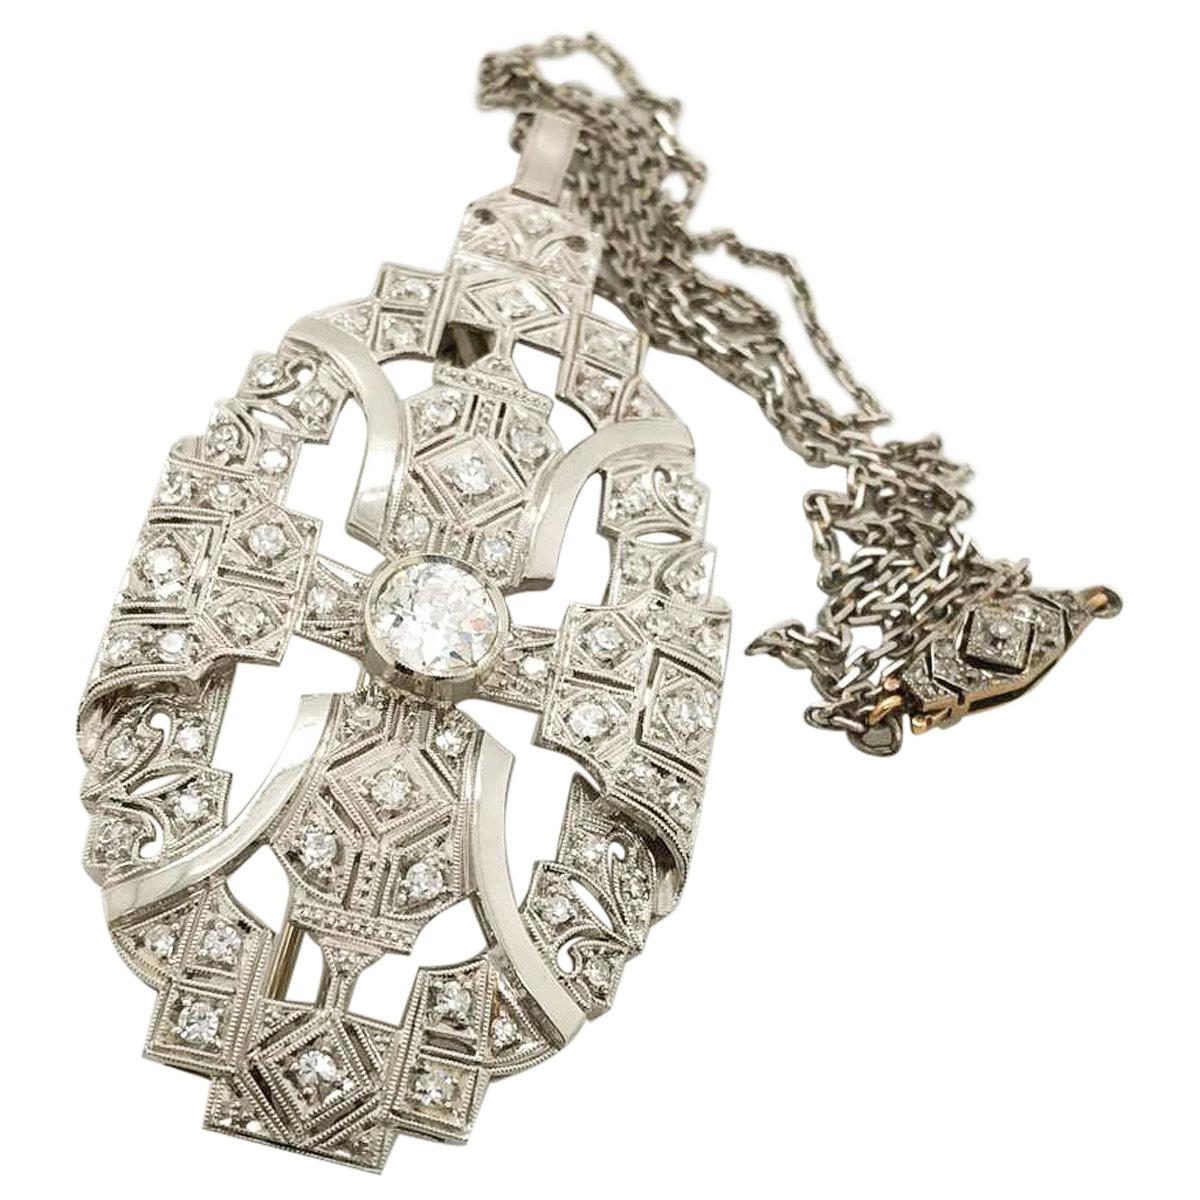 1.86 Carat Diamond Pendant Brooch with Platinum Chain 8